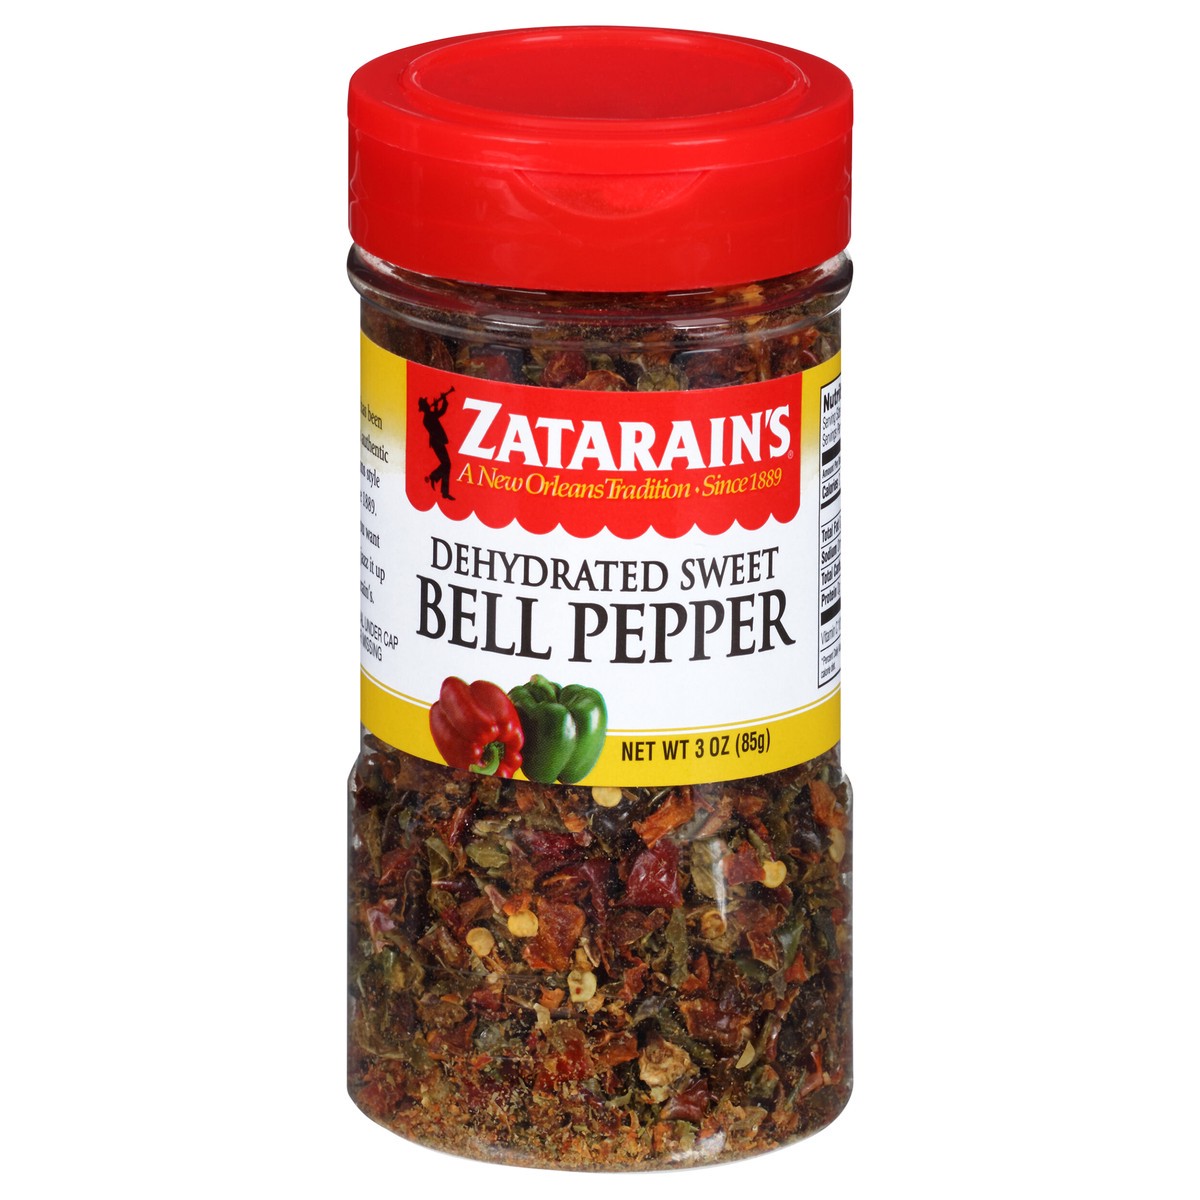 slide 2 of 10, Zatarain's Bell Pepper - Dehydrated, 3 oz